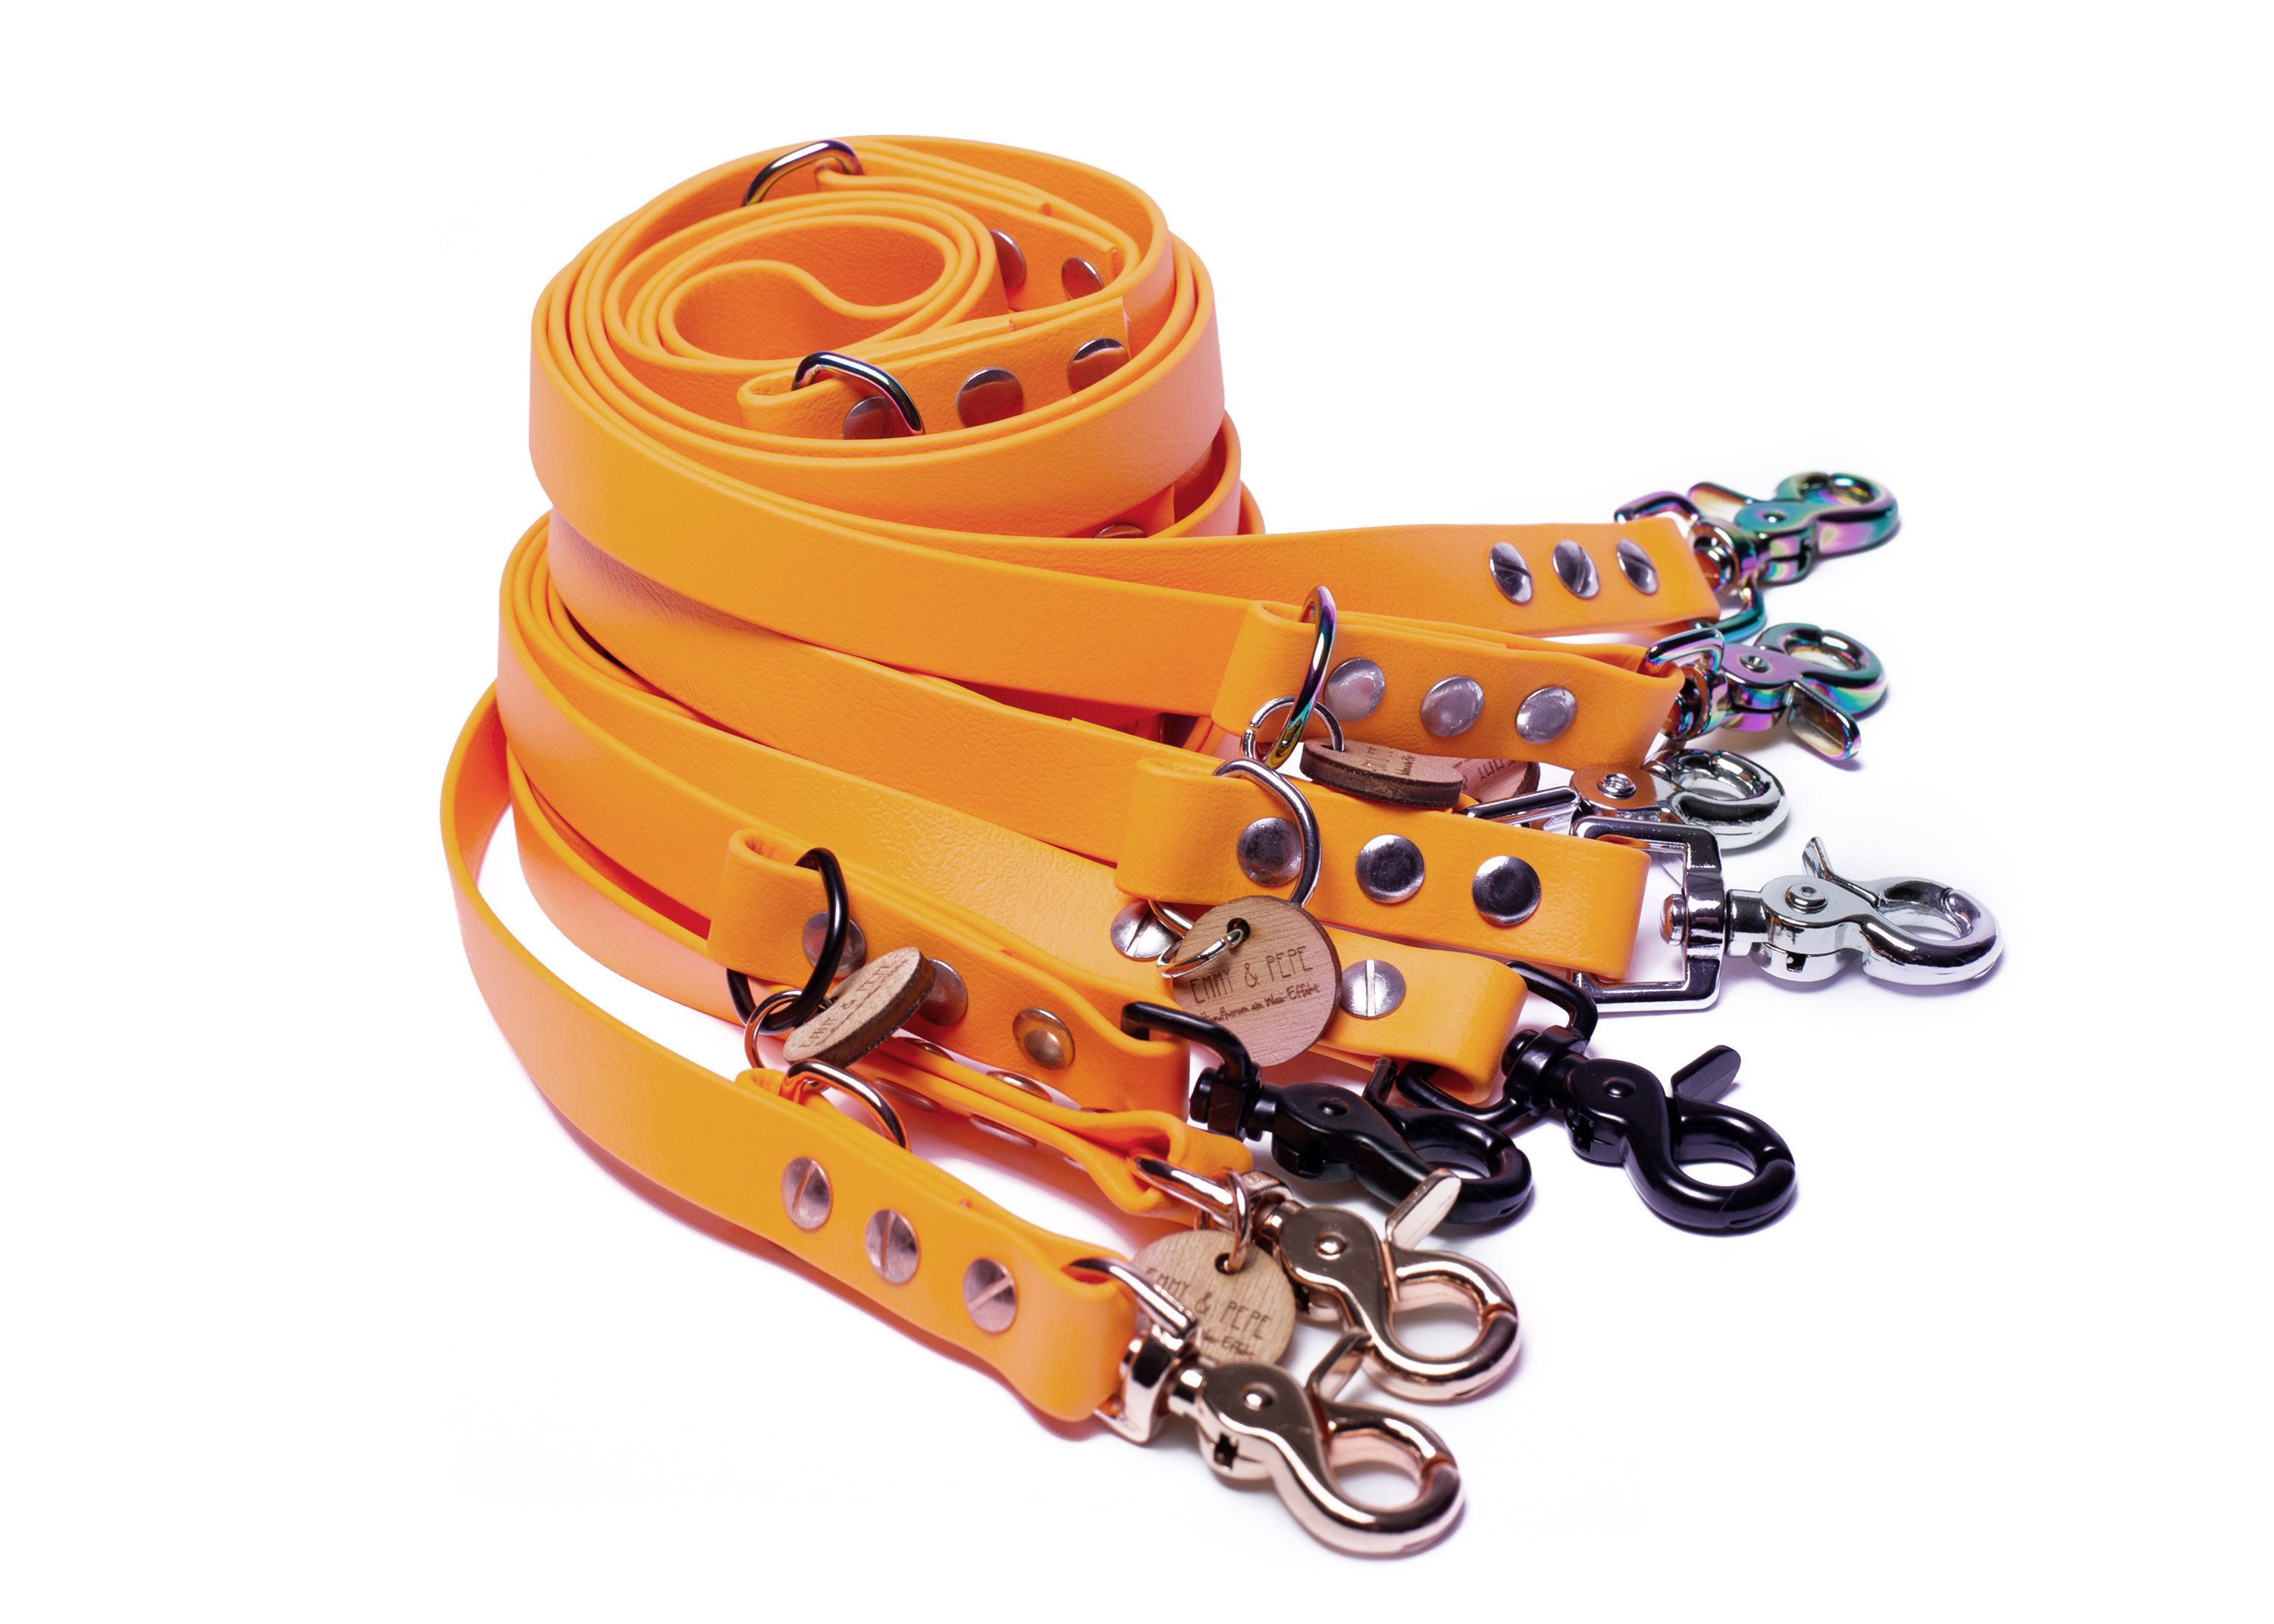 Biothane leash orange   2m adjustable